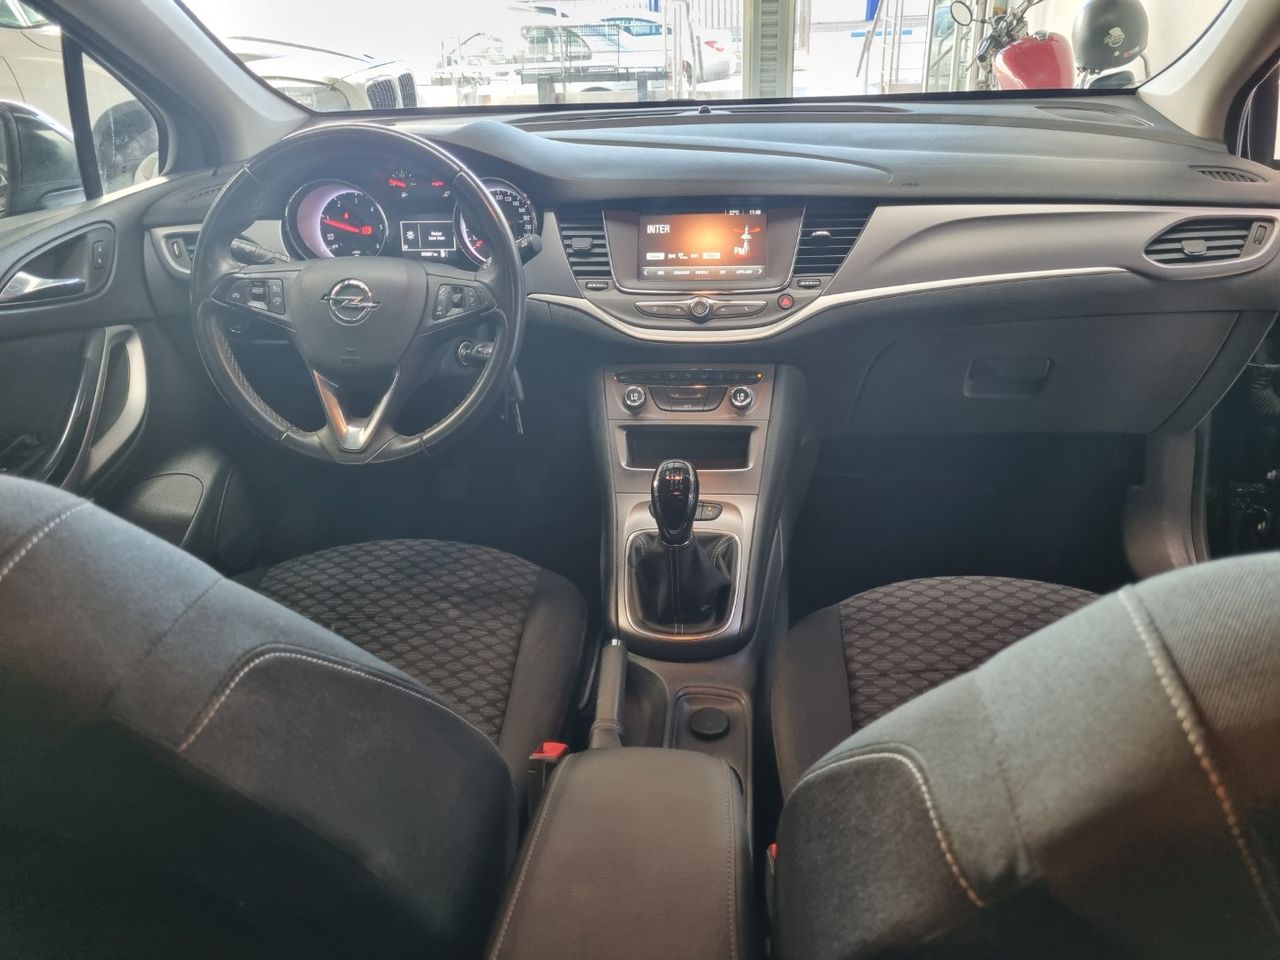 Foto Opel Astra 19